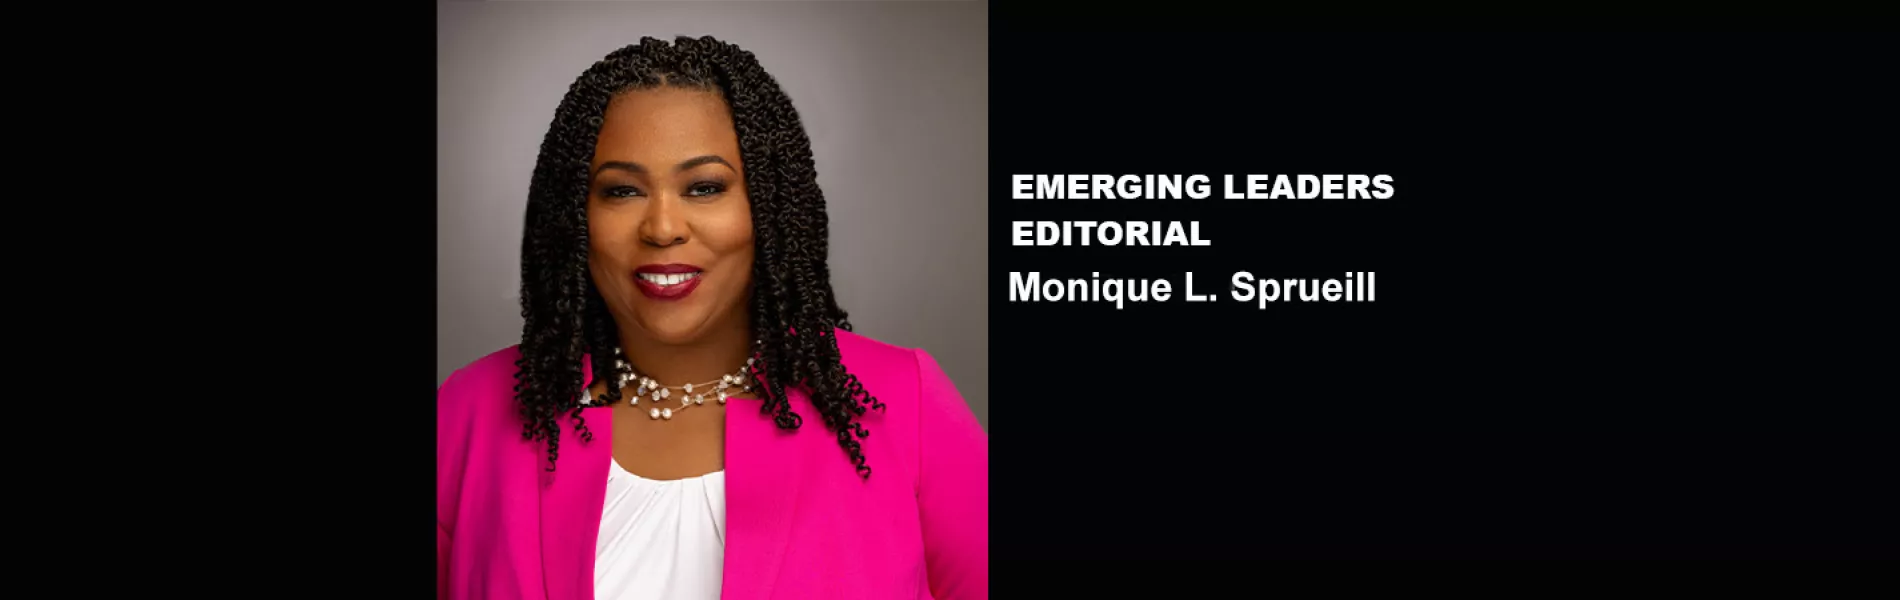 Emerging Leaders Editorial - Monique L. Sprueill